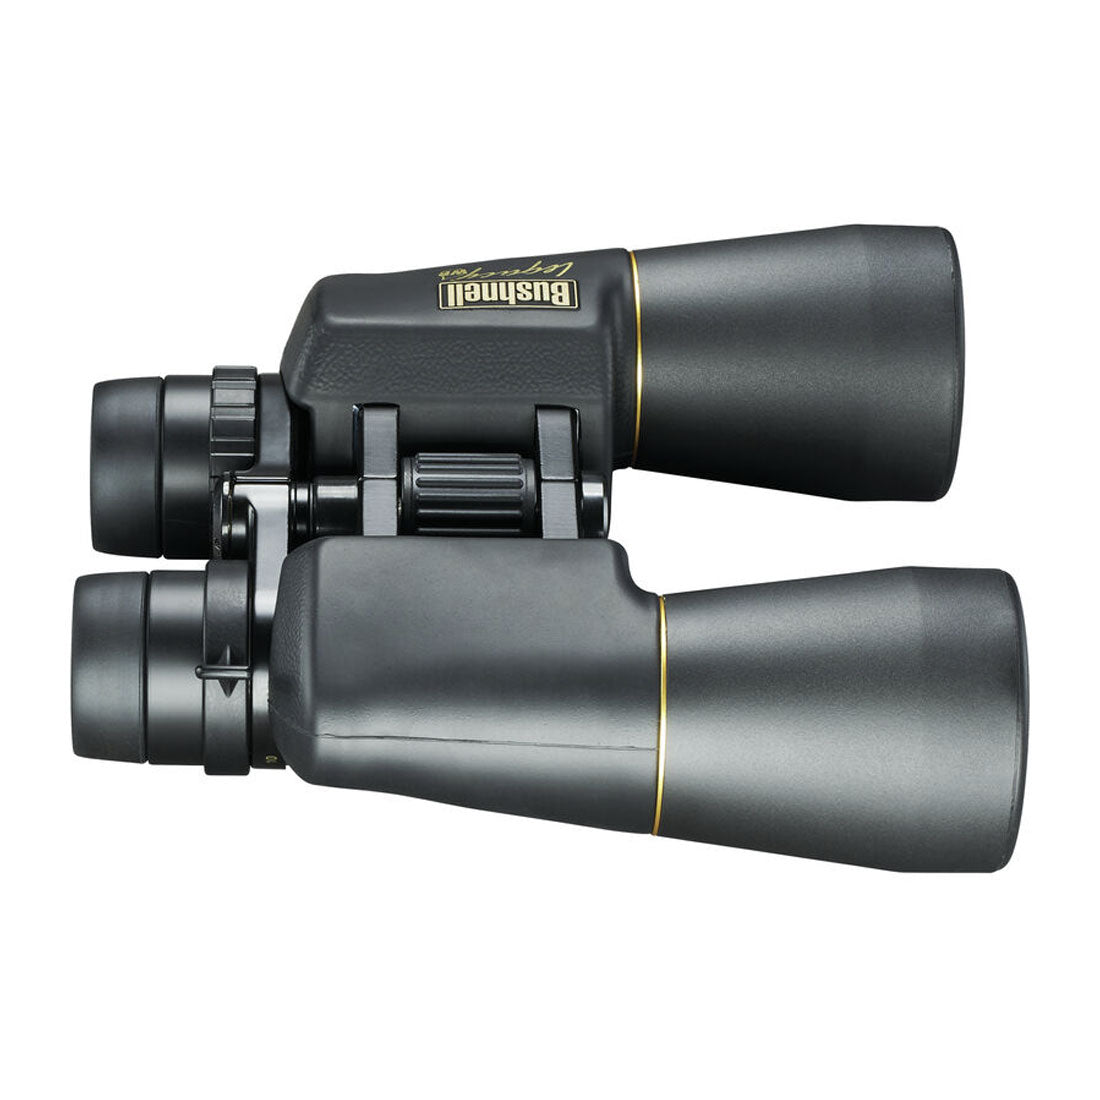 Bushnell 12-1225 Legacy 10-22x50 Binoculars